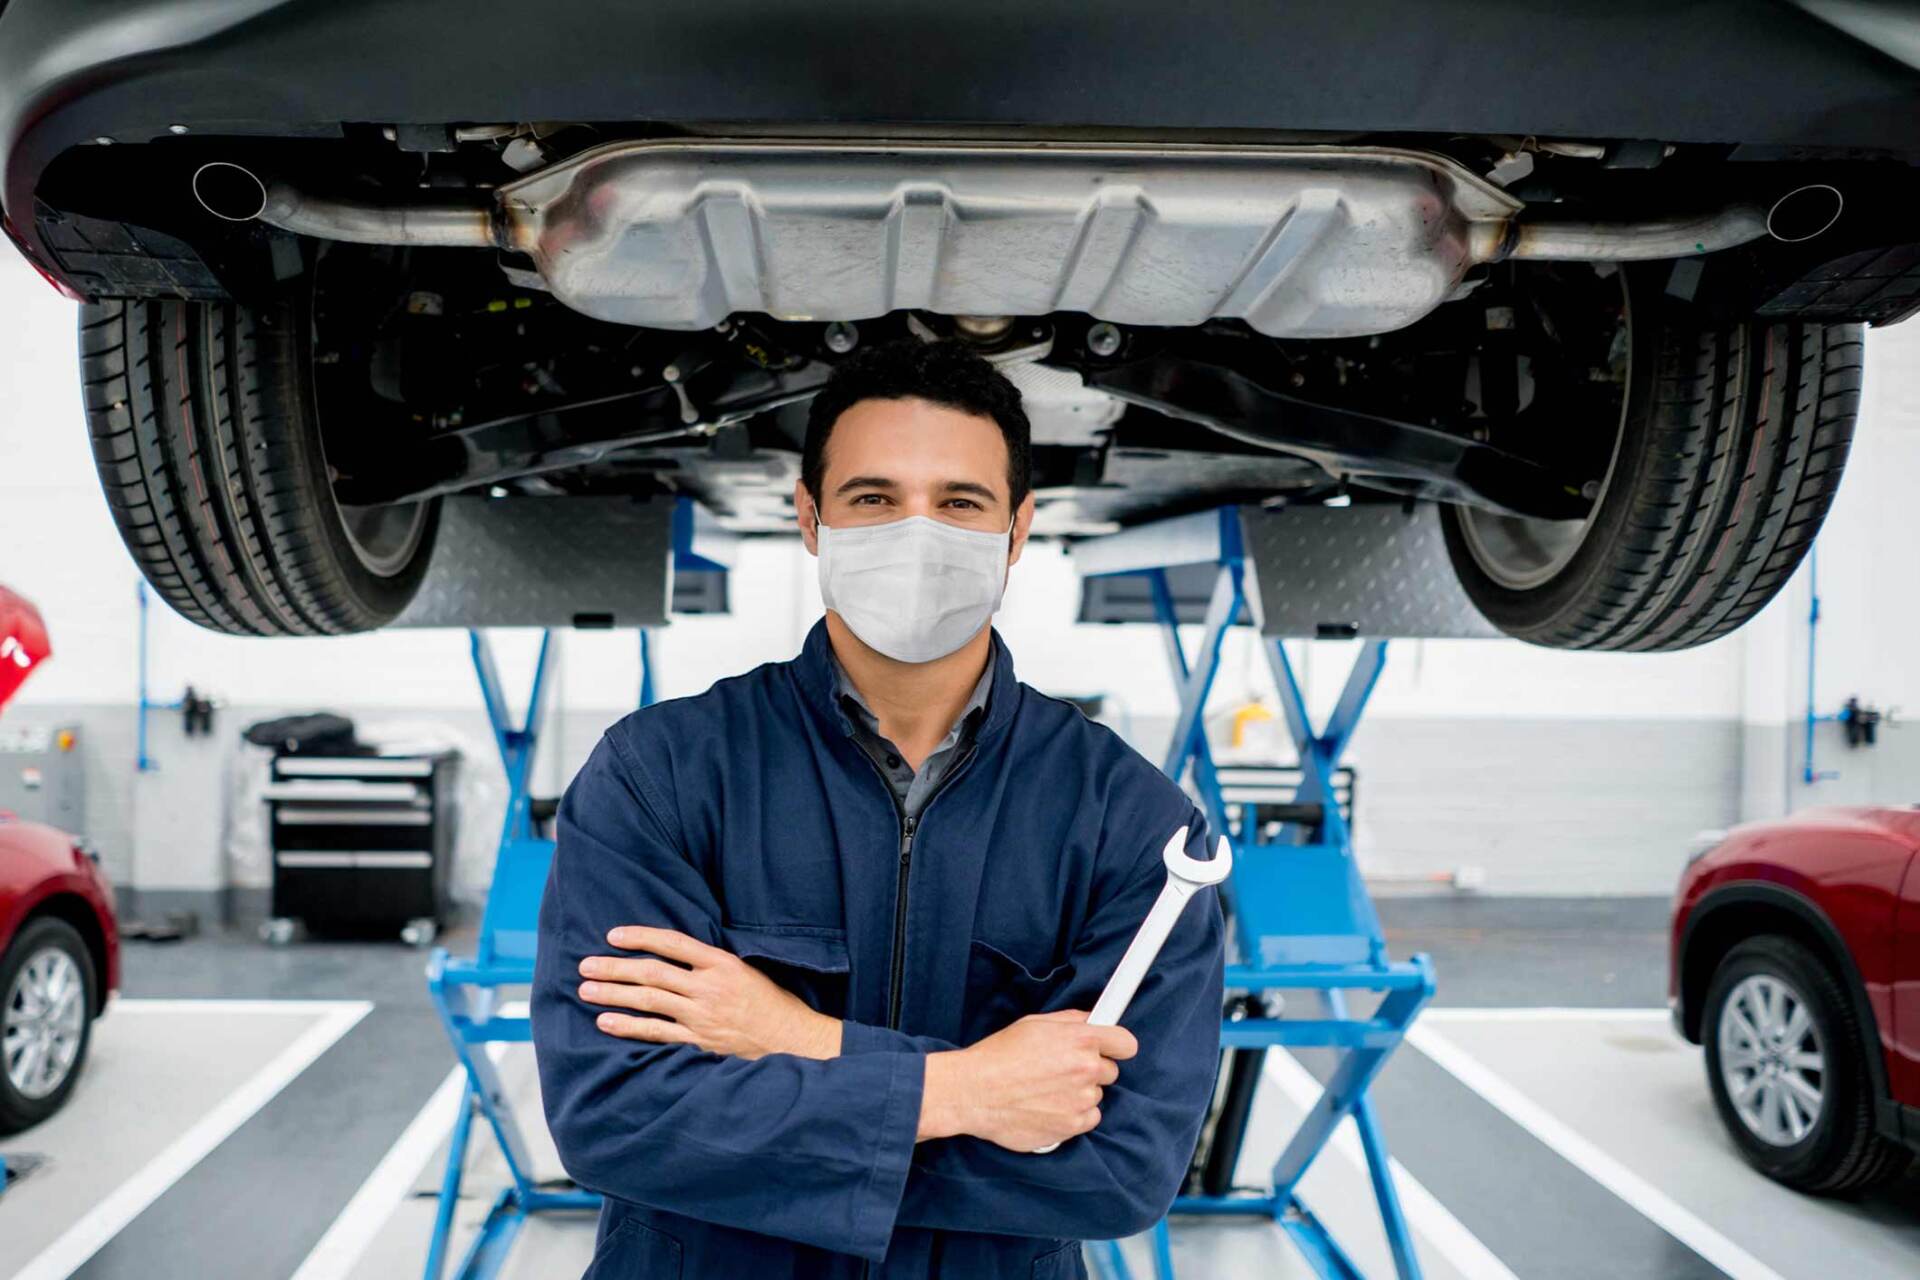 Mechanic holding wrench below car — Gary, IN — Macer Transportation